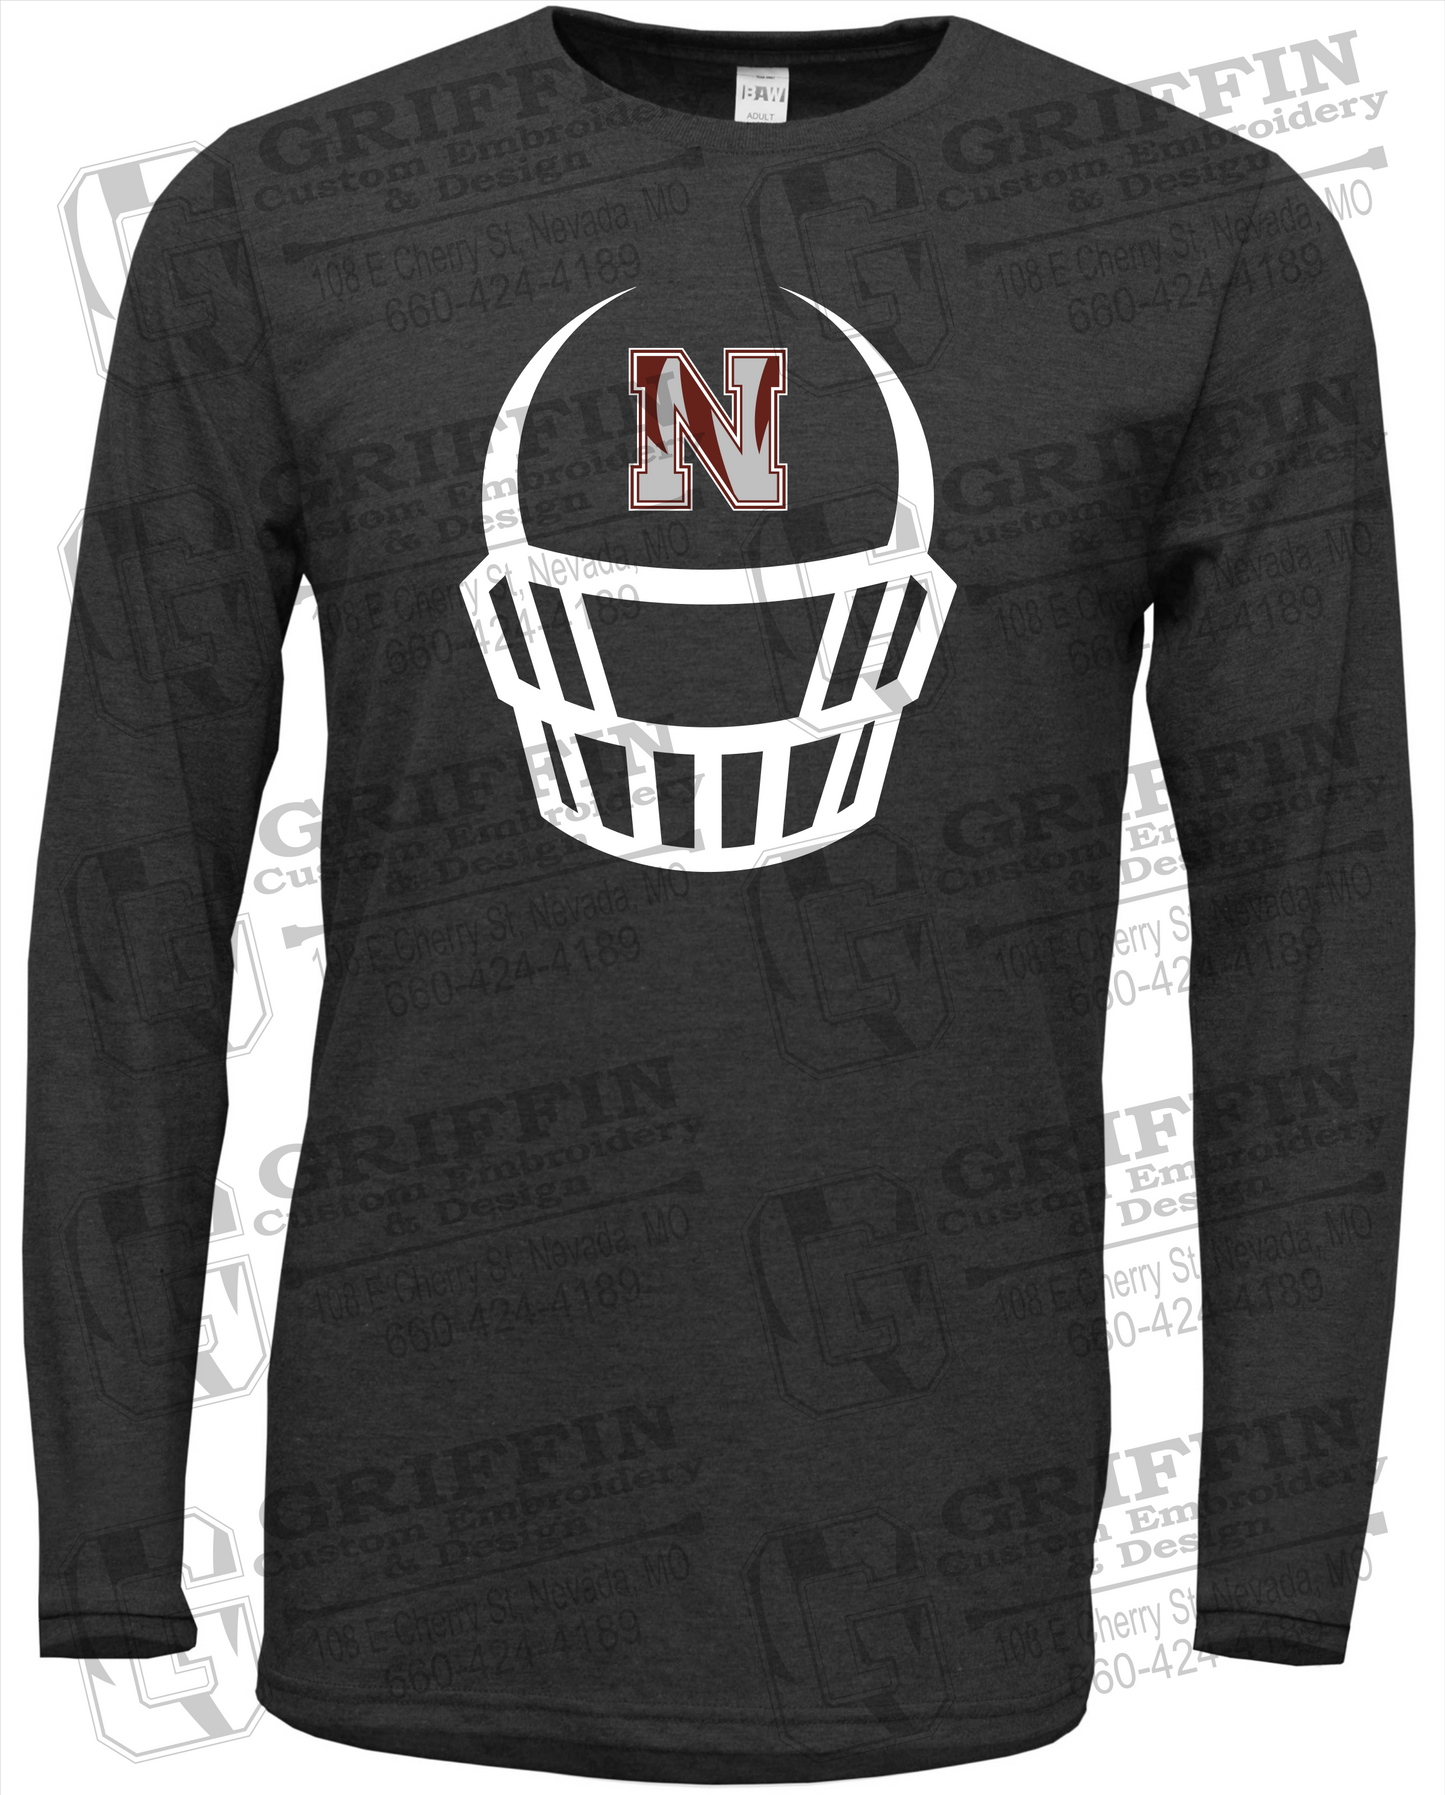 Nevada Tigers 22-P Long Sleeve T-Shirt - Football